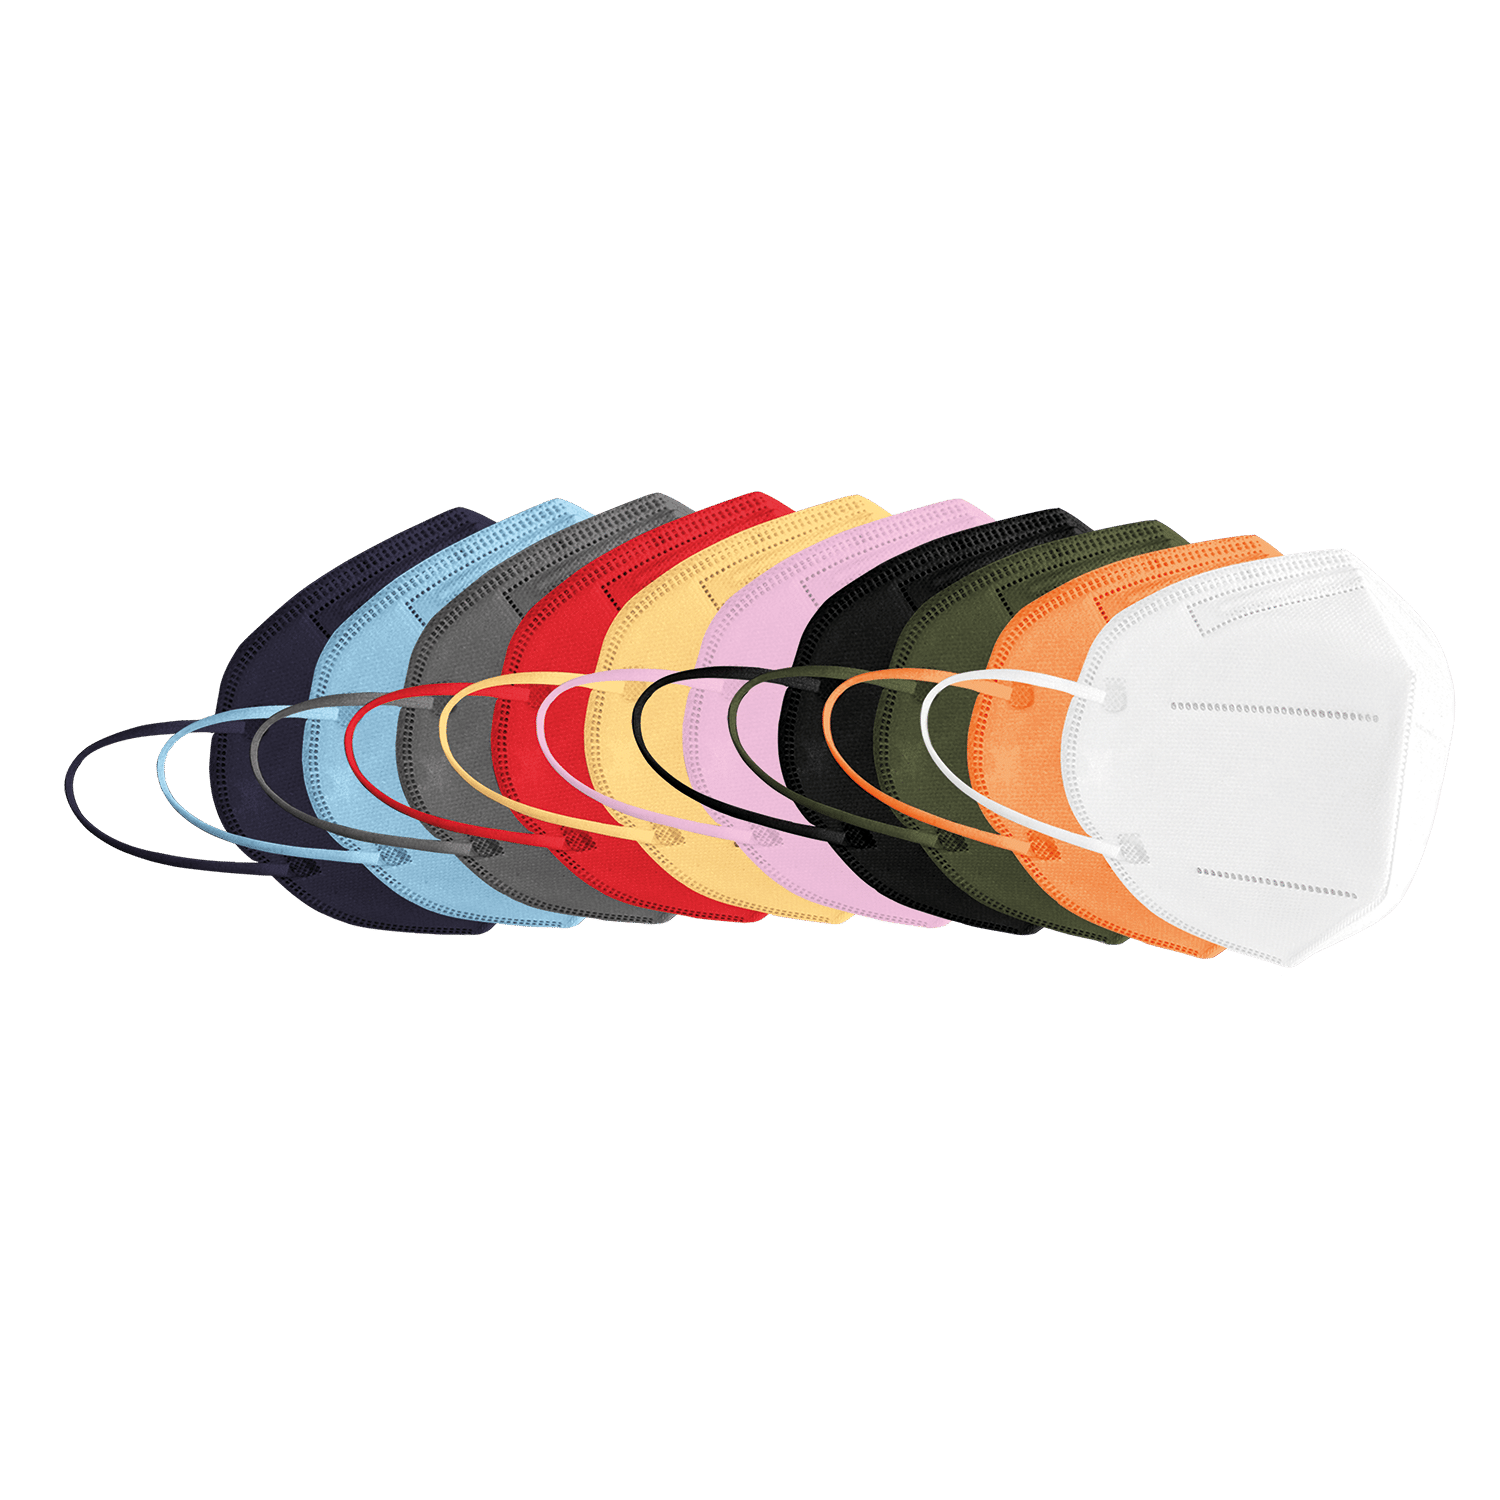 mskprotect-atemschutz-masken-ffp2-farbig